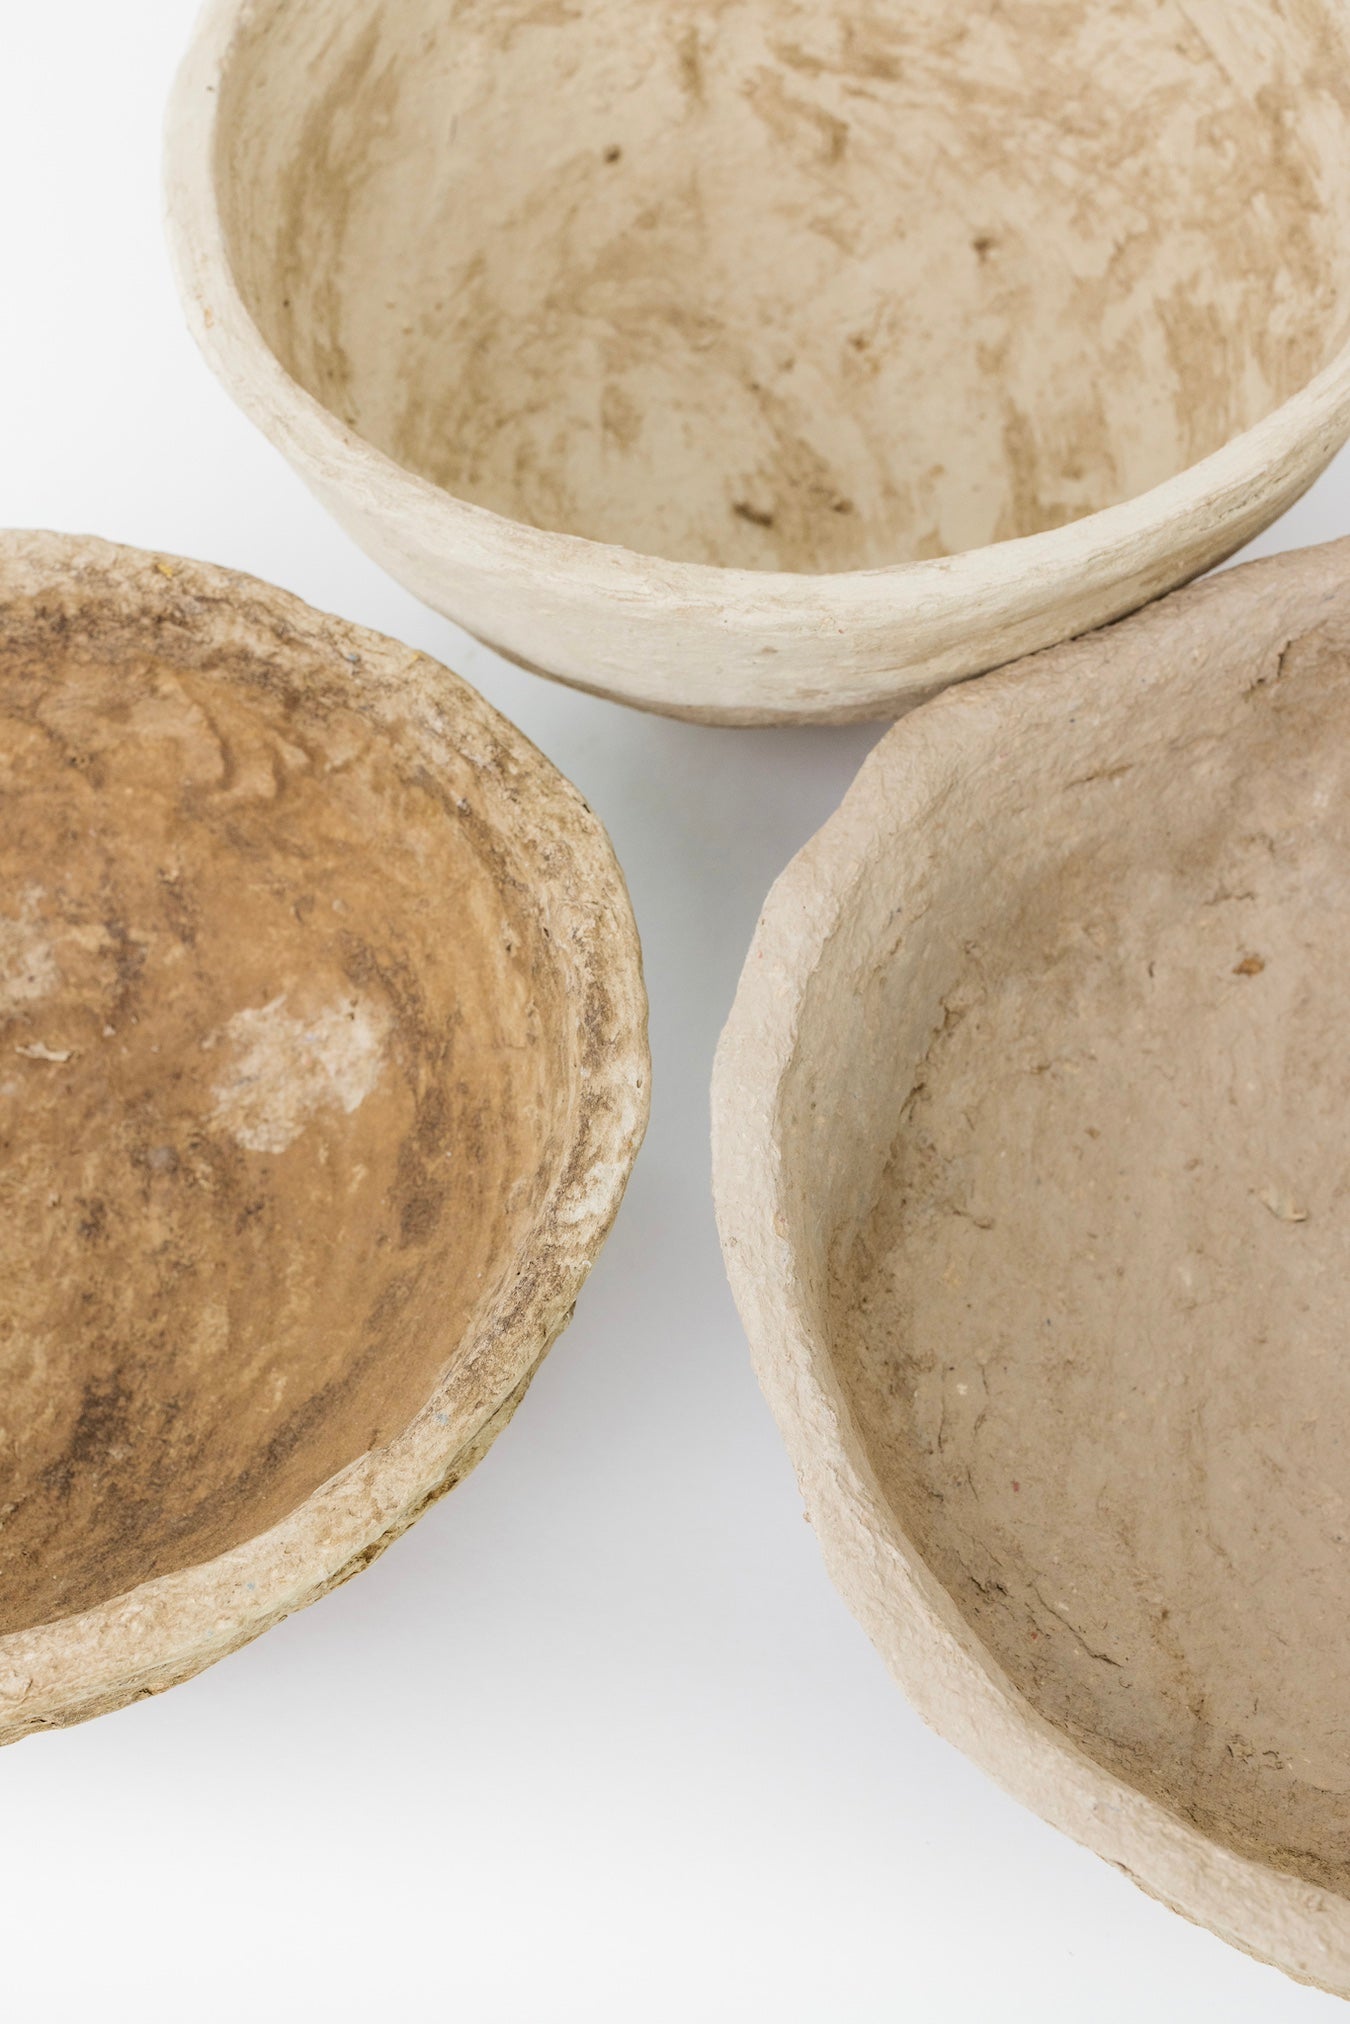 Florence Paper Mache Bowls - 2 Sizes